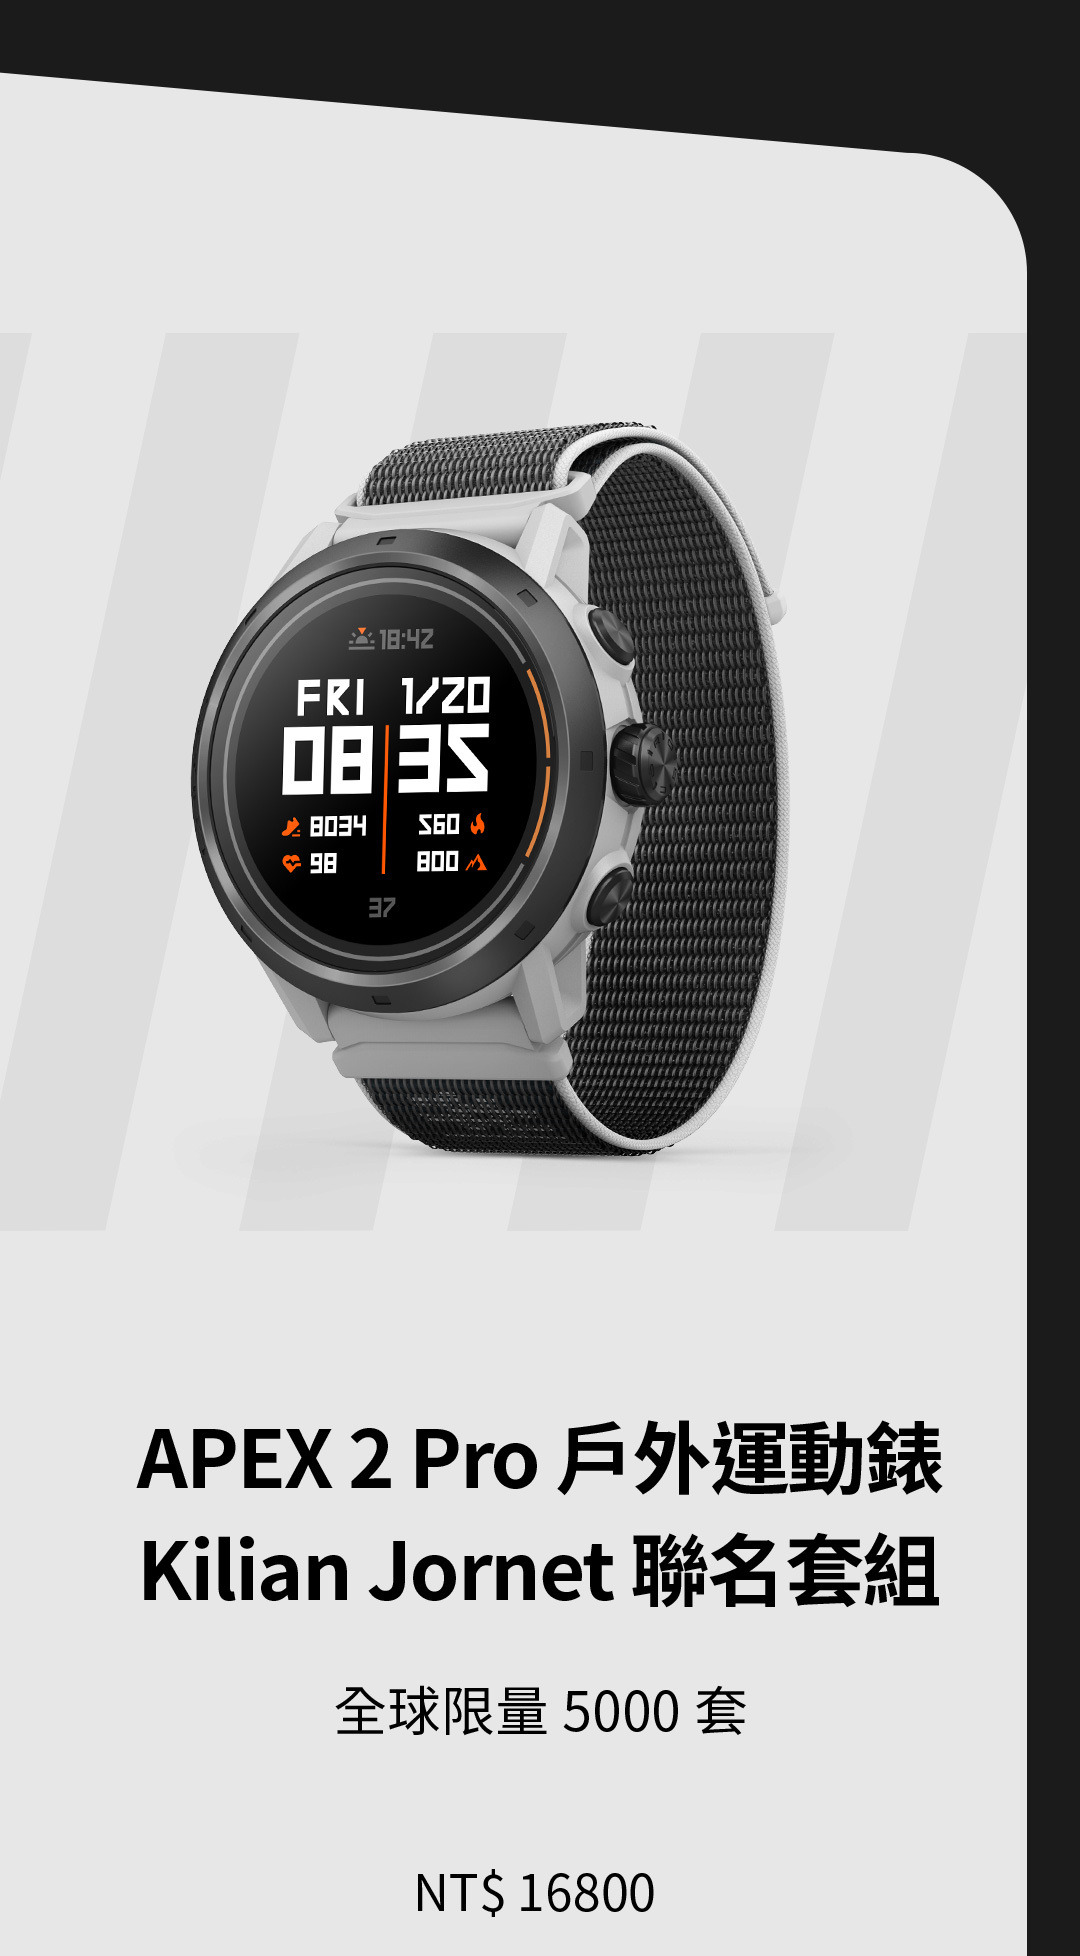 APEX 2 Pro 戶外運動錶 Kilian Jornet 聯名套組 全球限量 5000 套